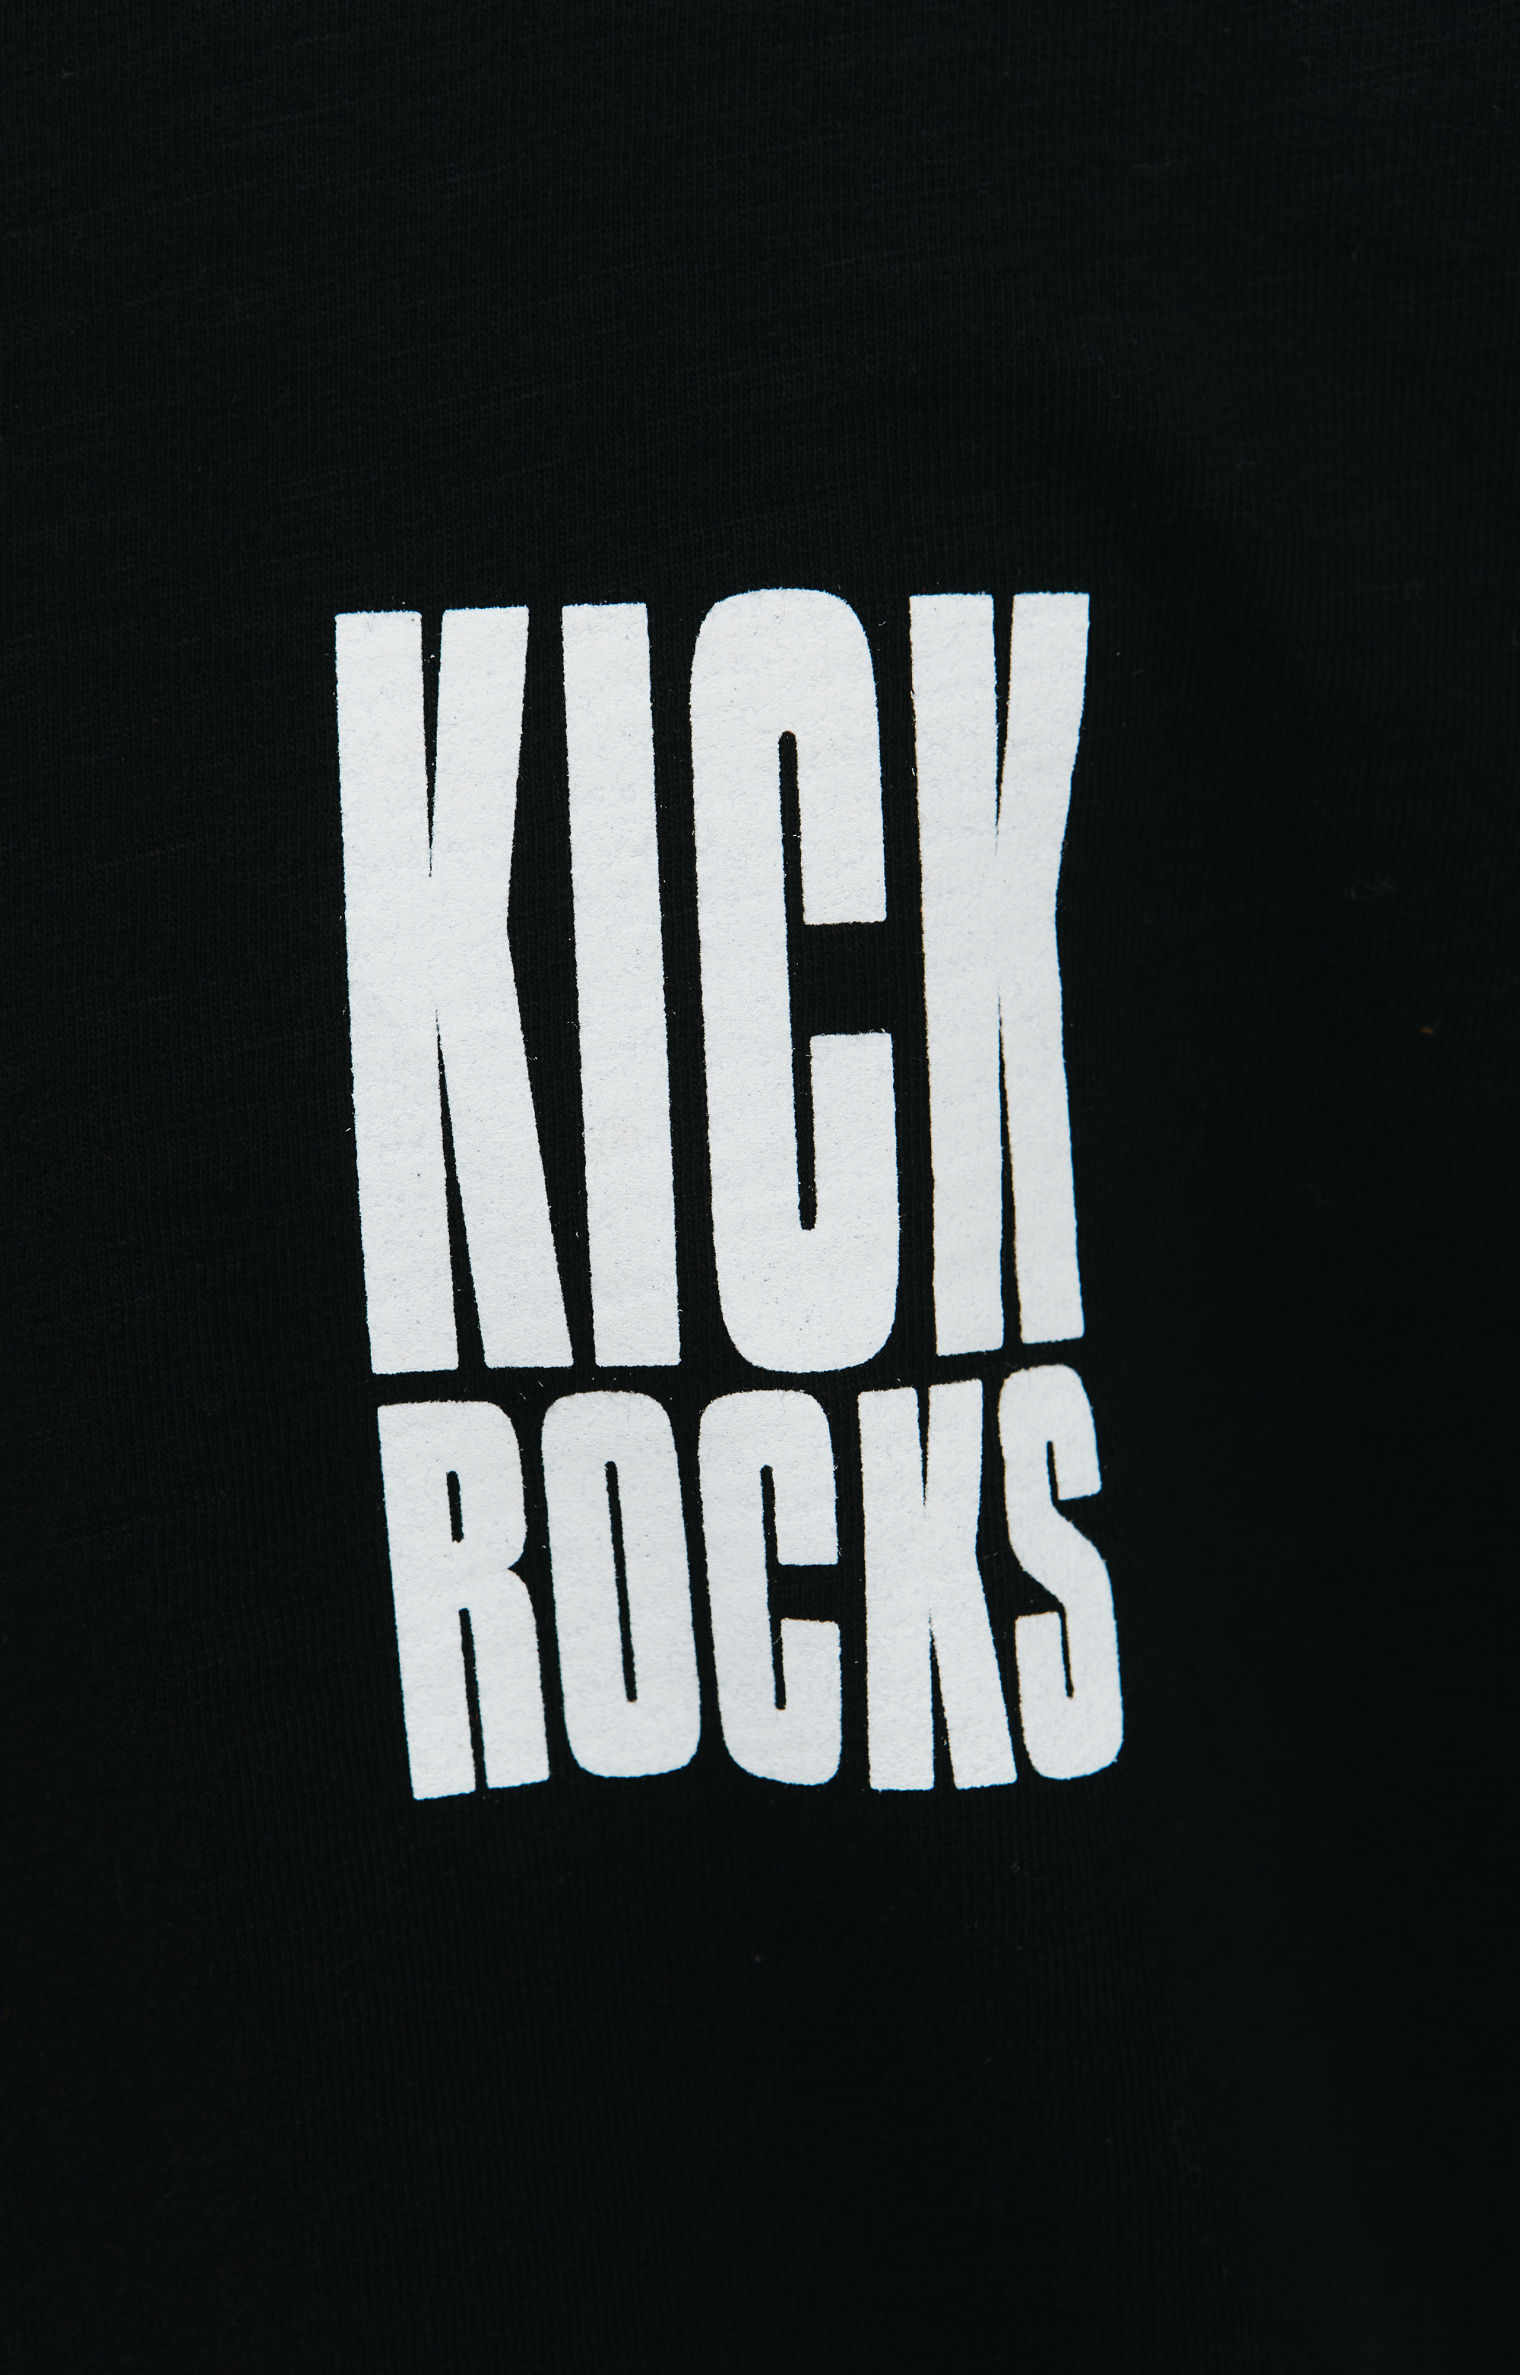 Nahmias Kick rocks printed t-shirt